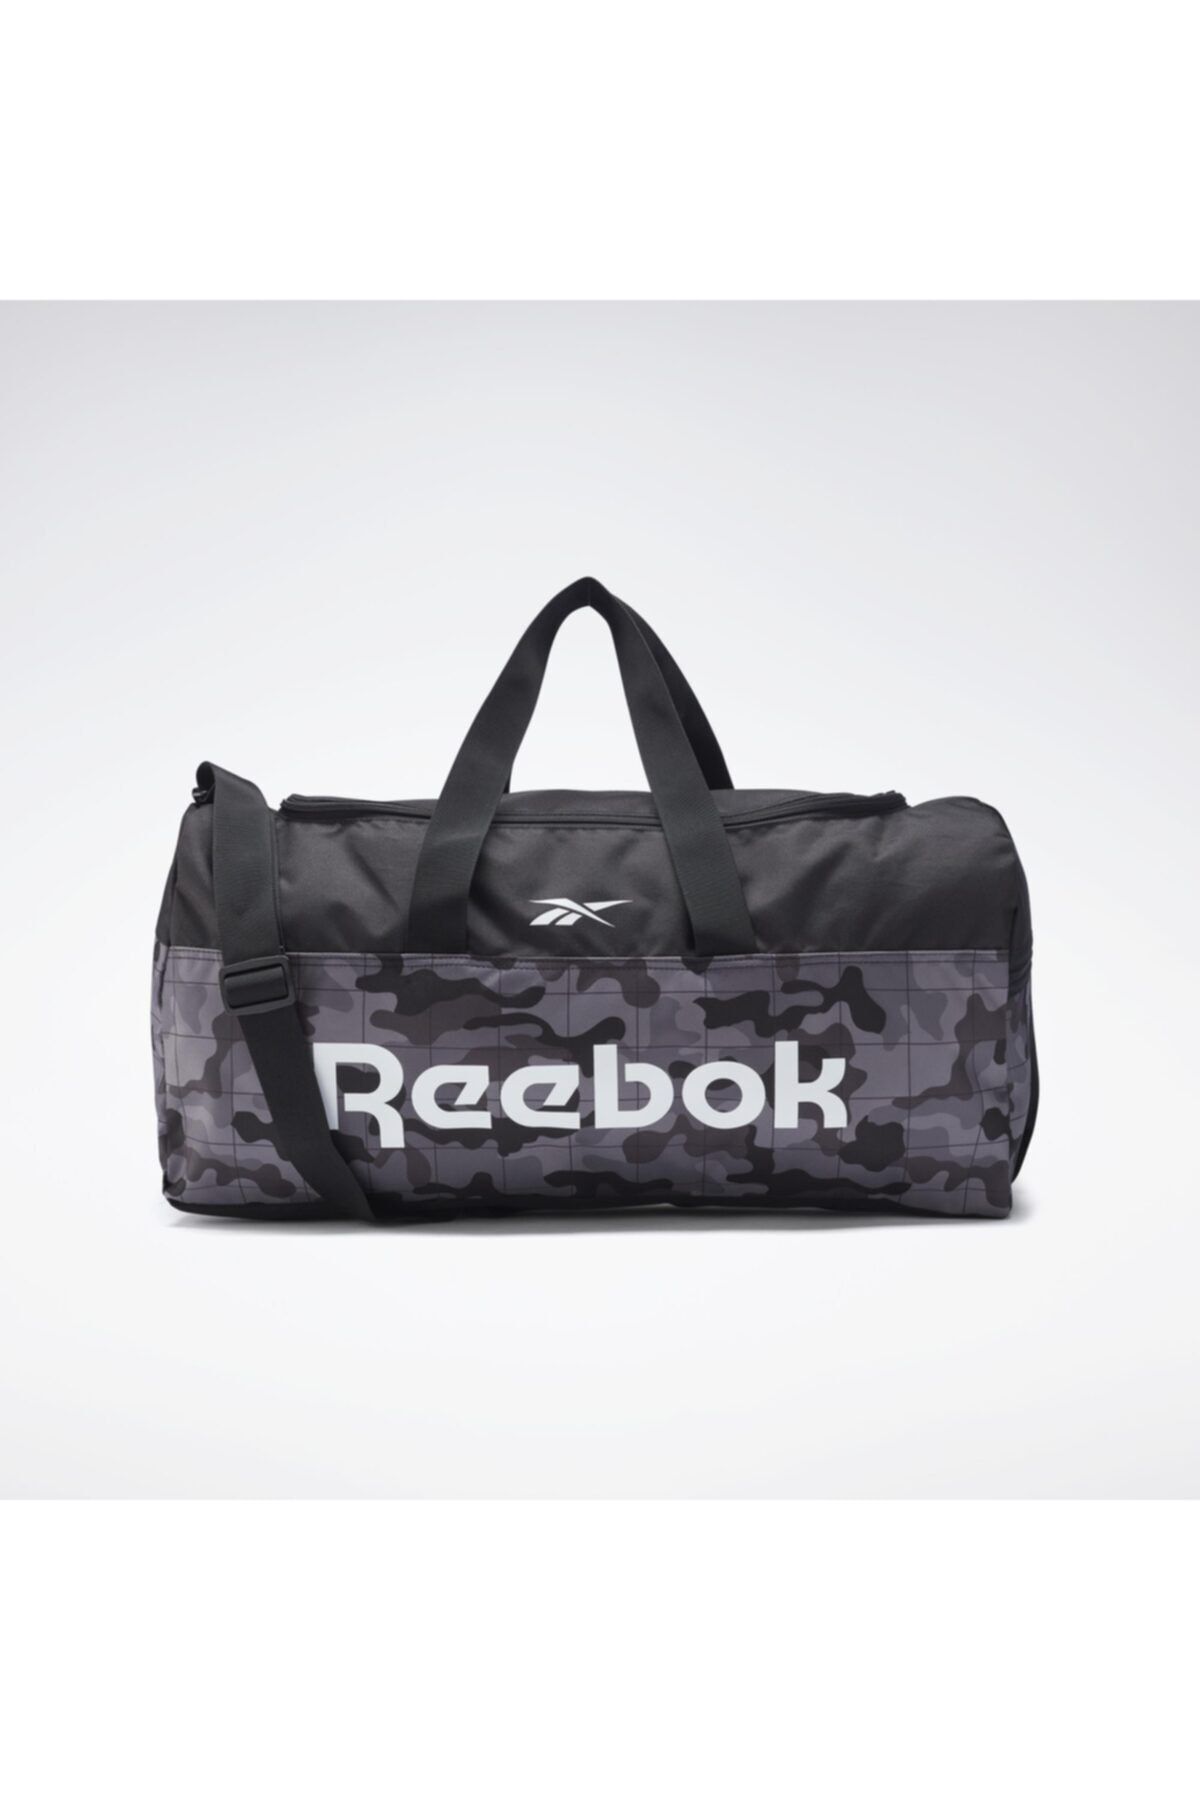 Reebok Actıve Core Grıp Duffel Bag Medıum Çanta